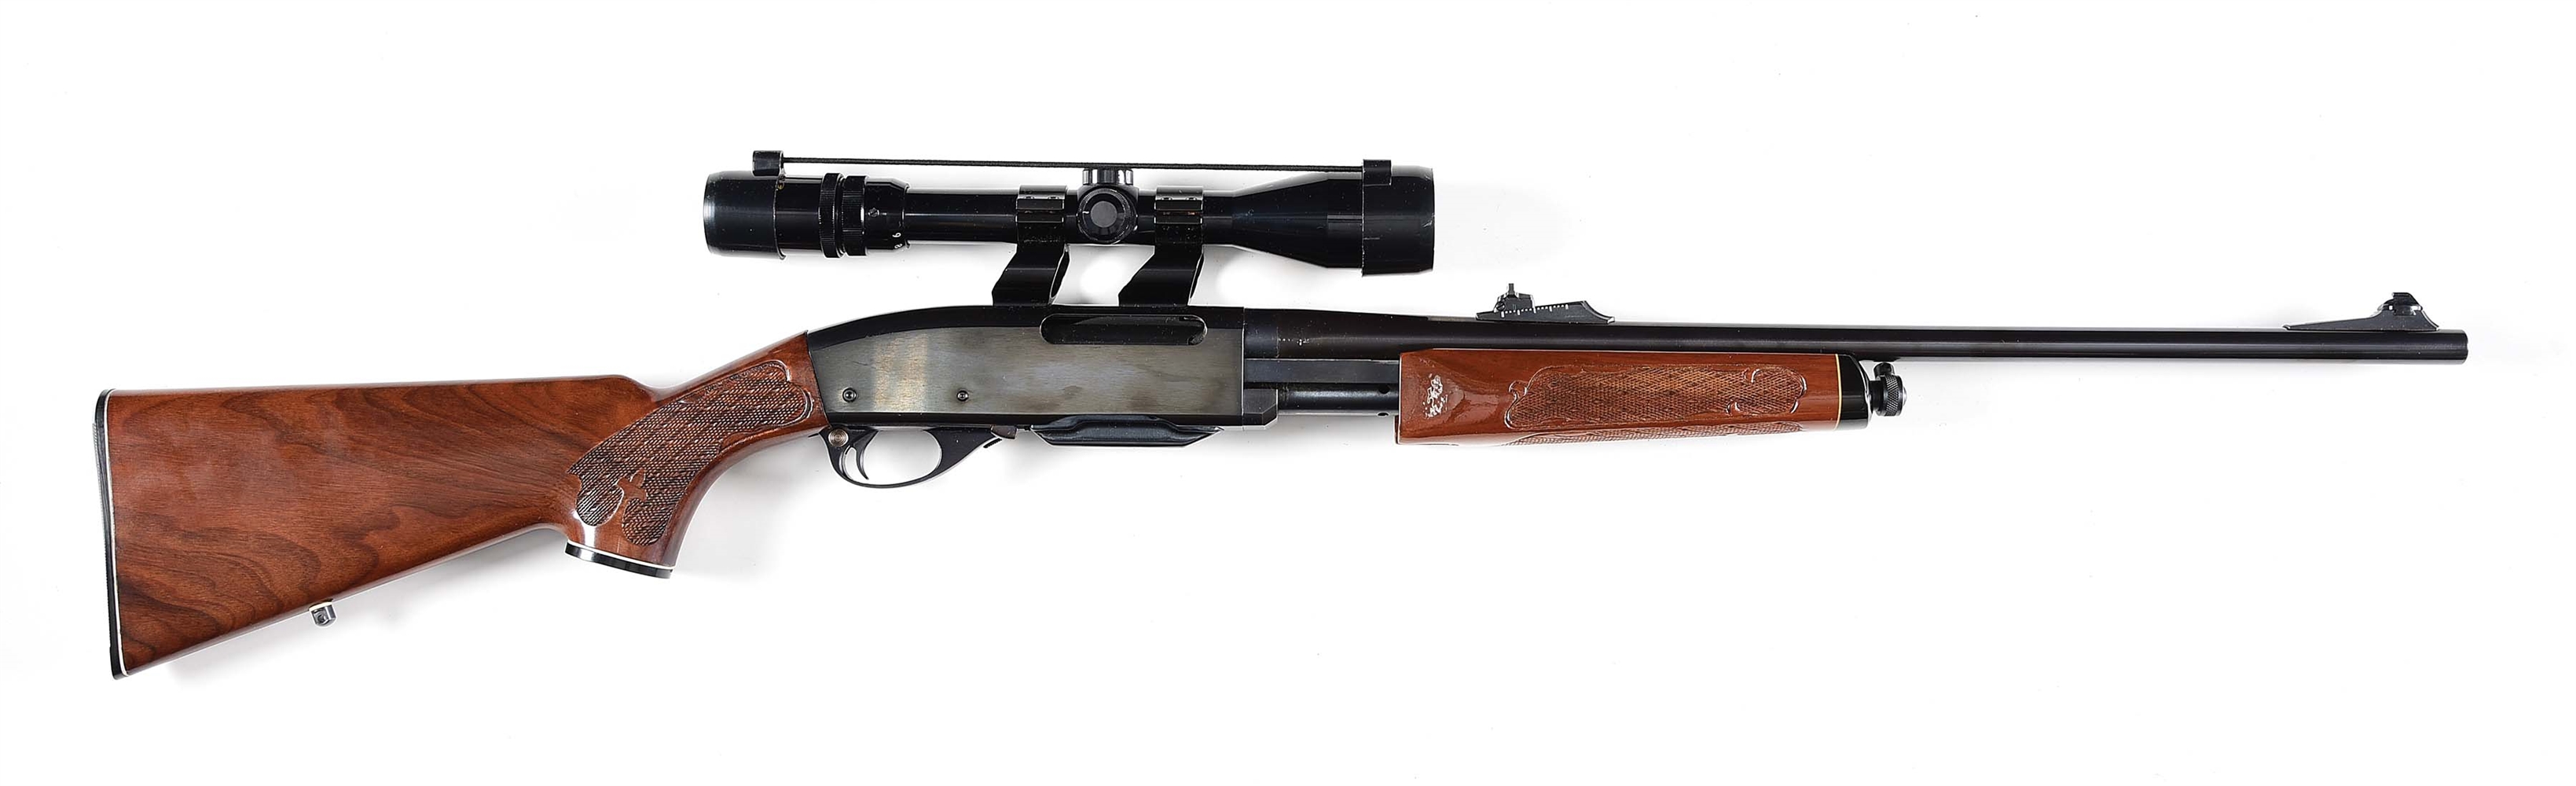 M) remington model 760 gamemaster .30-06 springfield pump action rifle. 